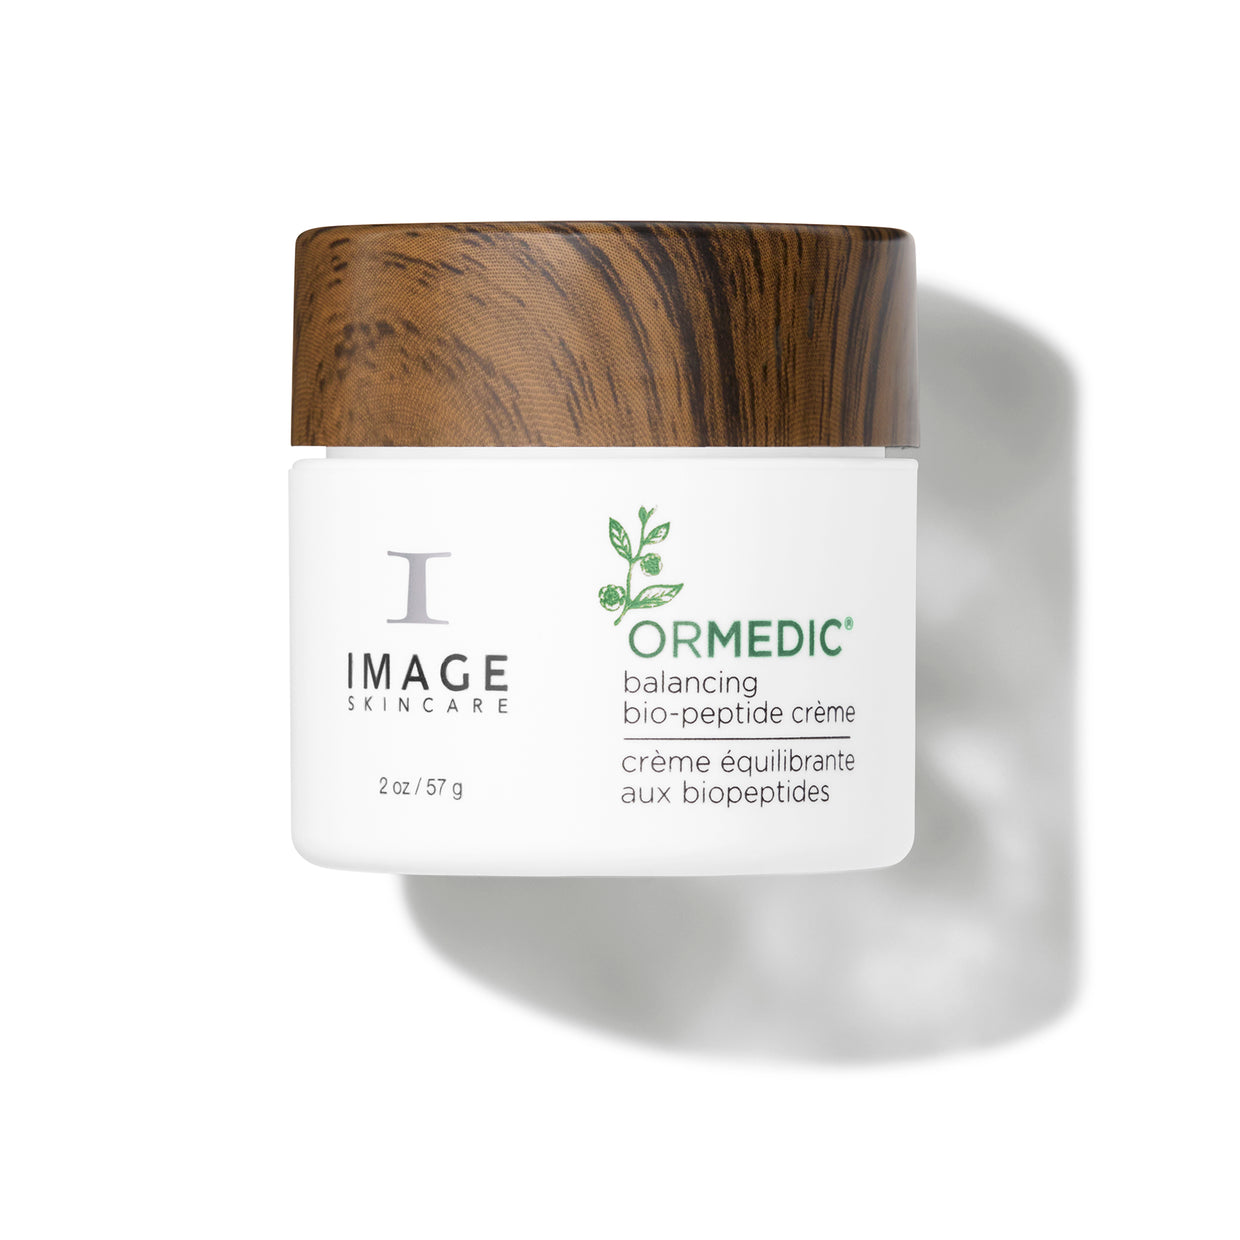 Image Skincare Ormedic Balancing Bio-Peptide Creme Shop At Exclusive Beauty